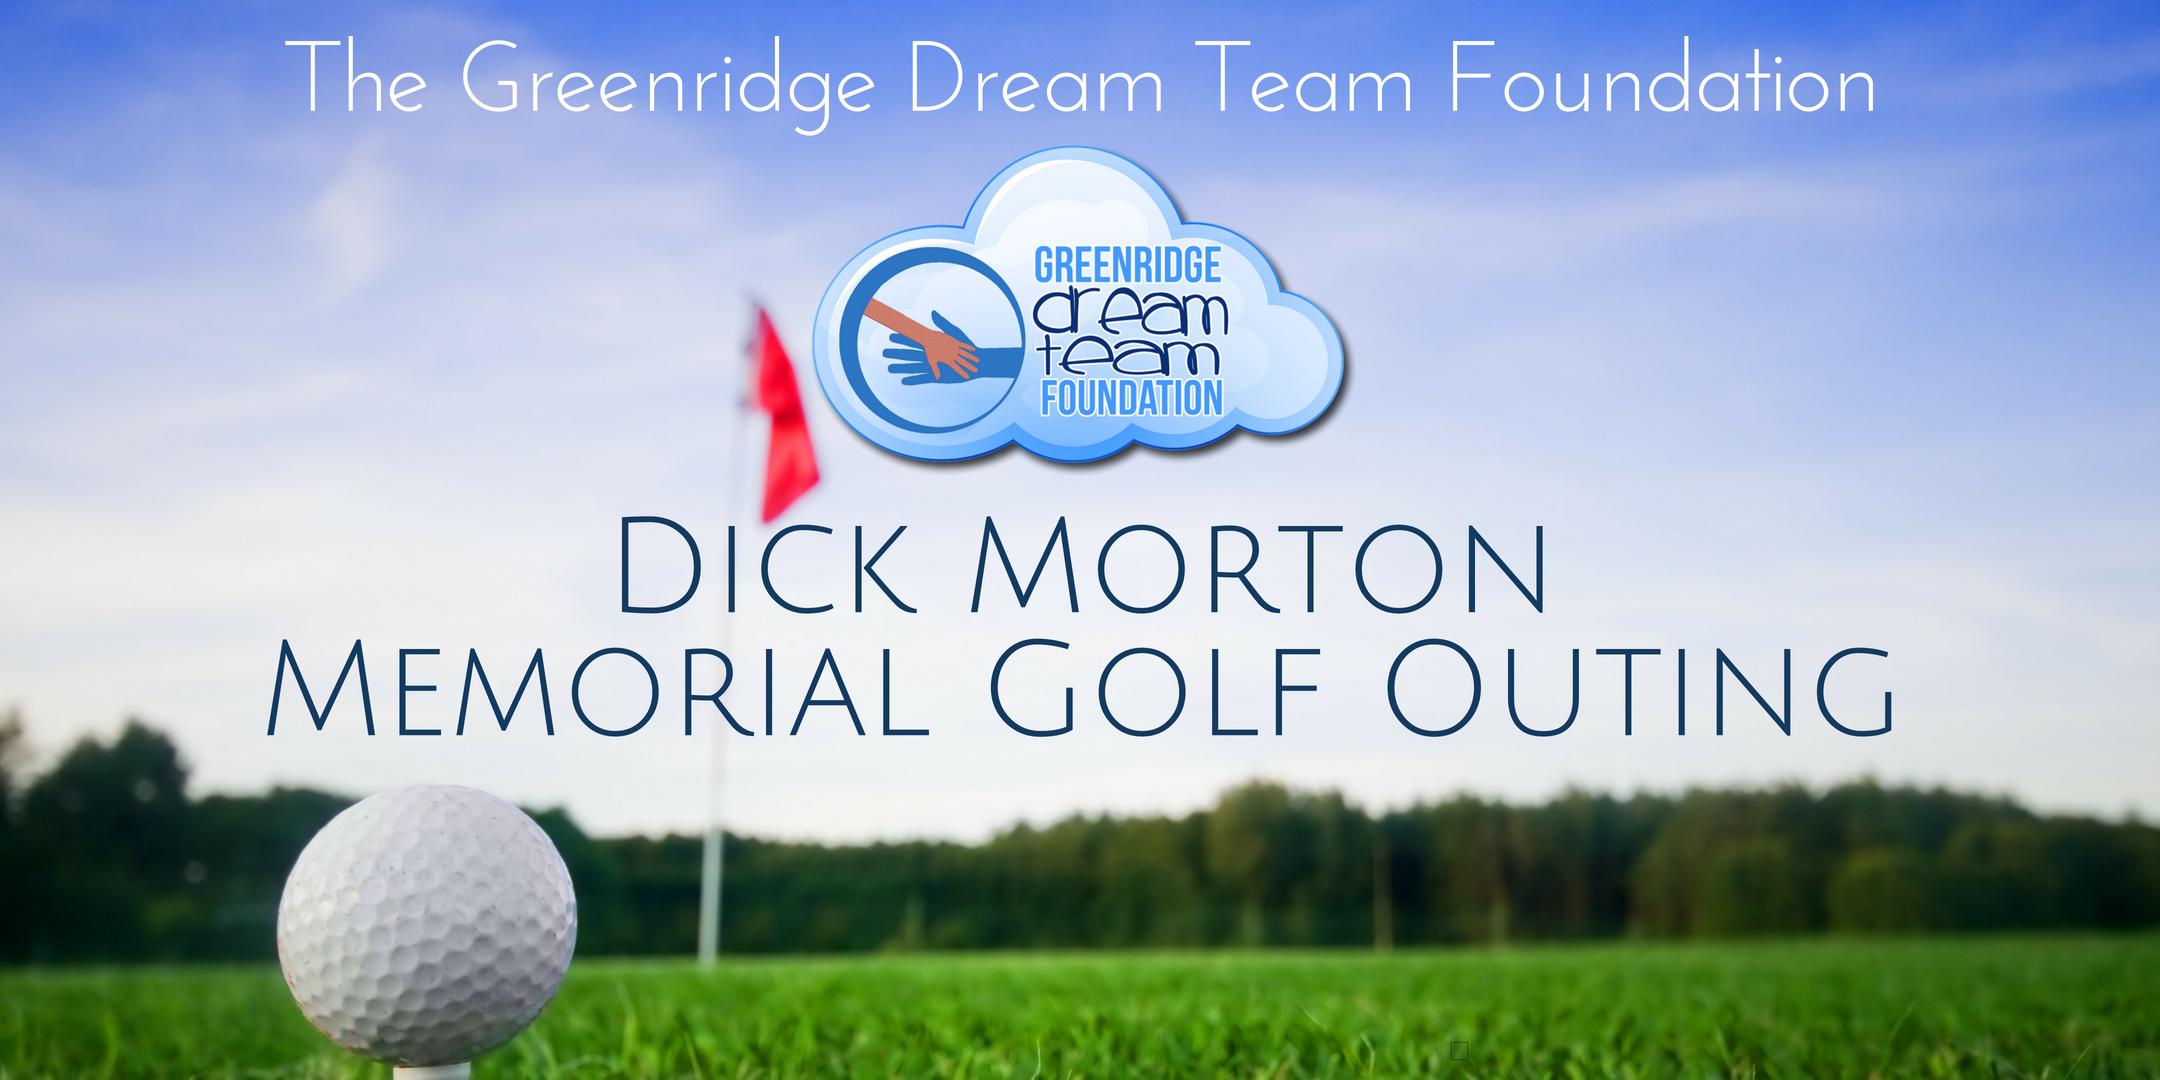 The 7th Annual Greenridge Dream Team Foundation - Dick Morton Memorial Golf Outing